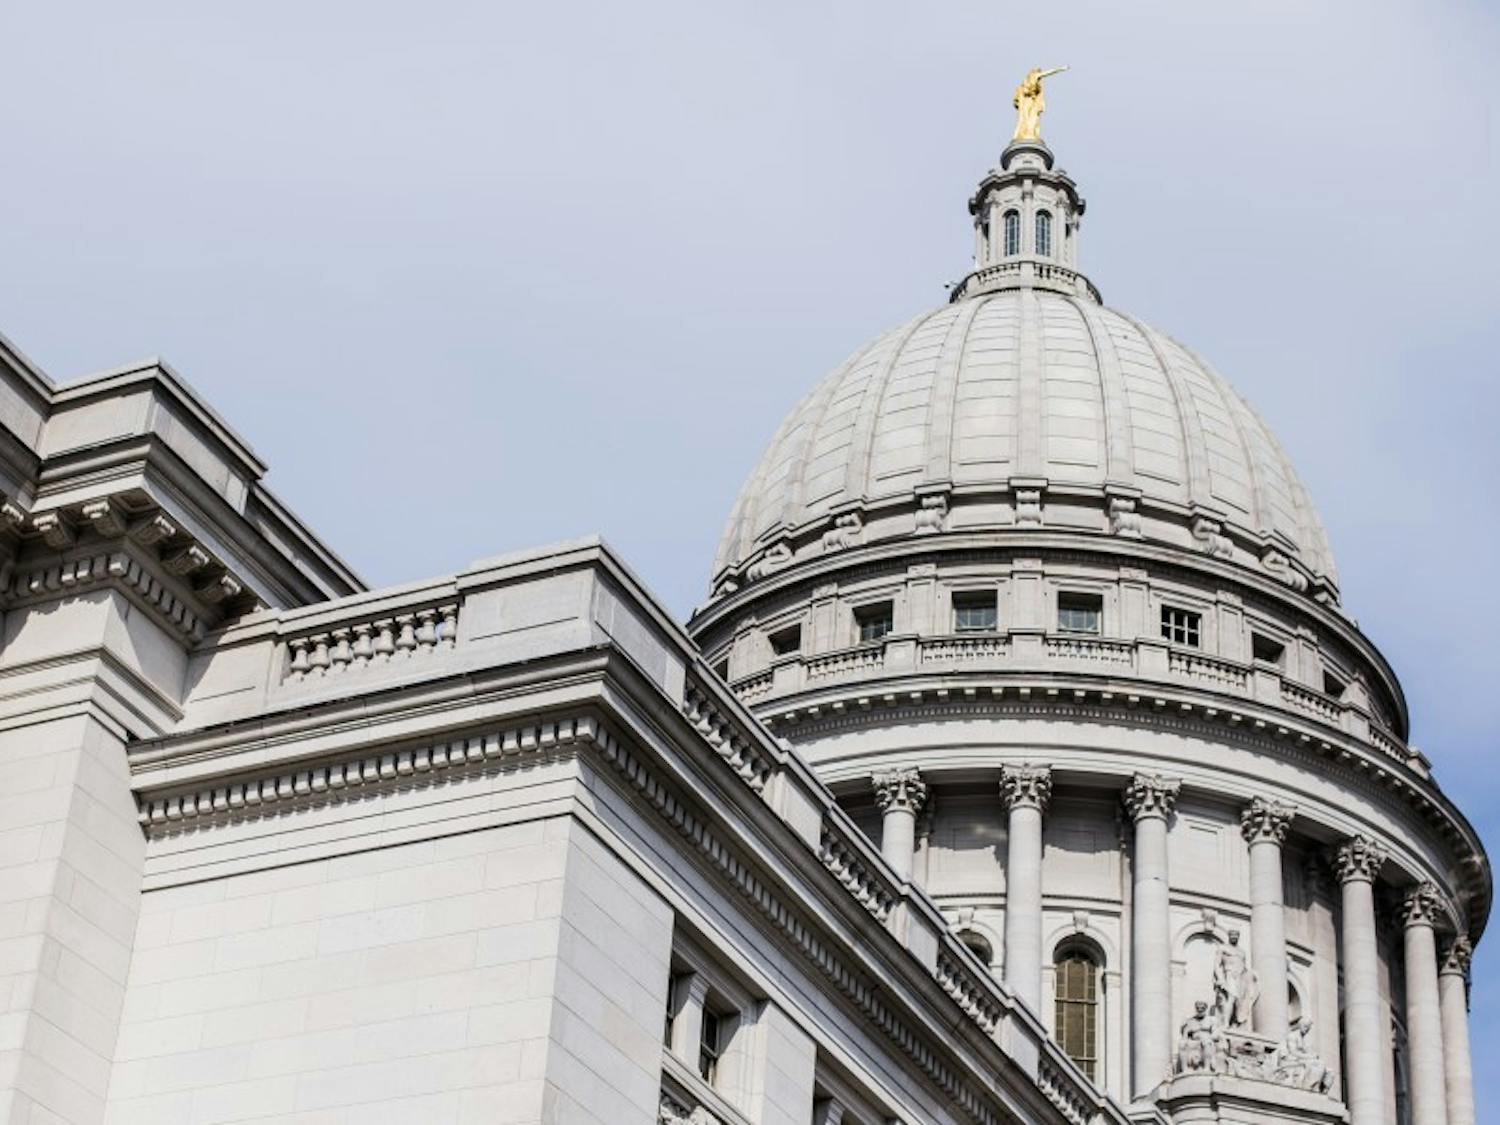 The state Legislature passed nine bills regarding opioid treatment Tuesday. Gov. Walker said he will sign them into law.